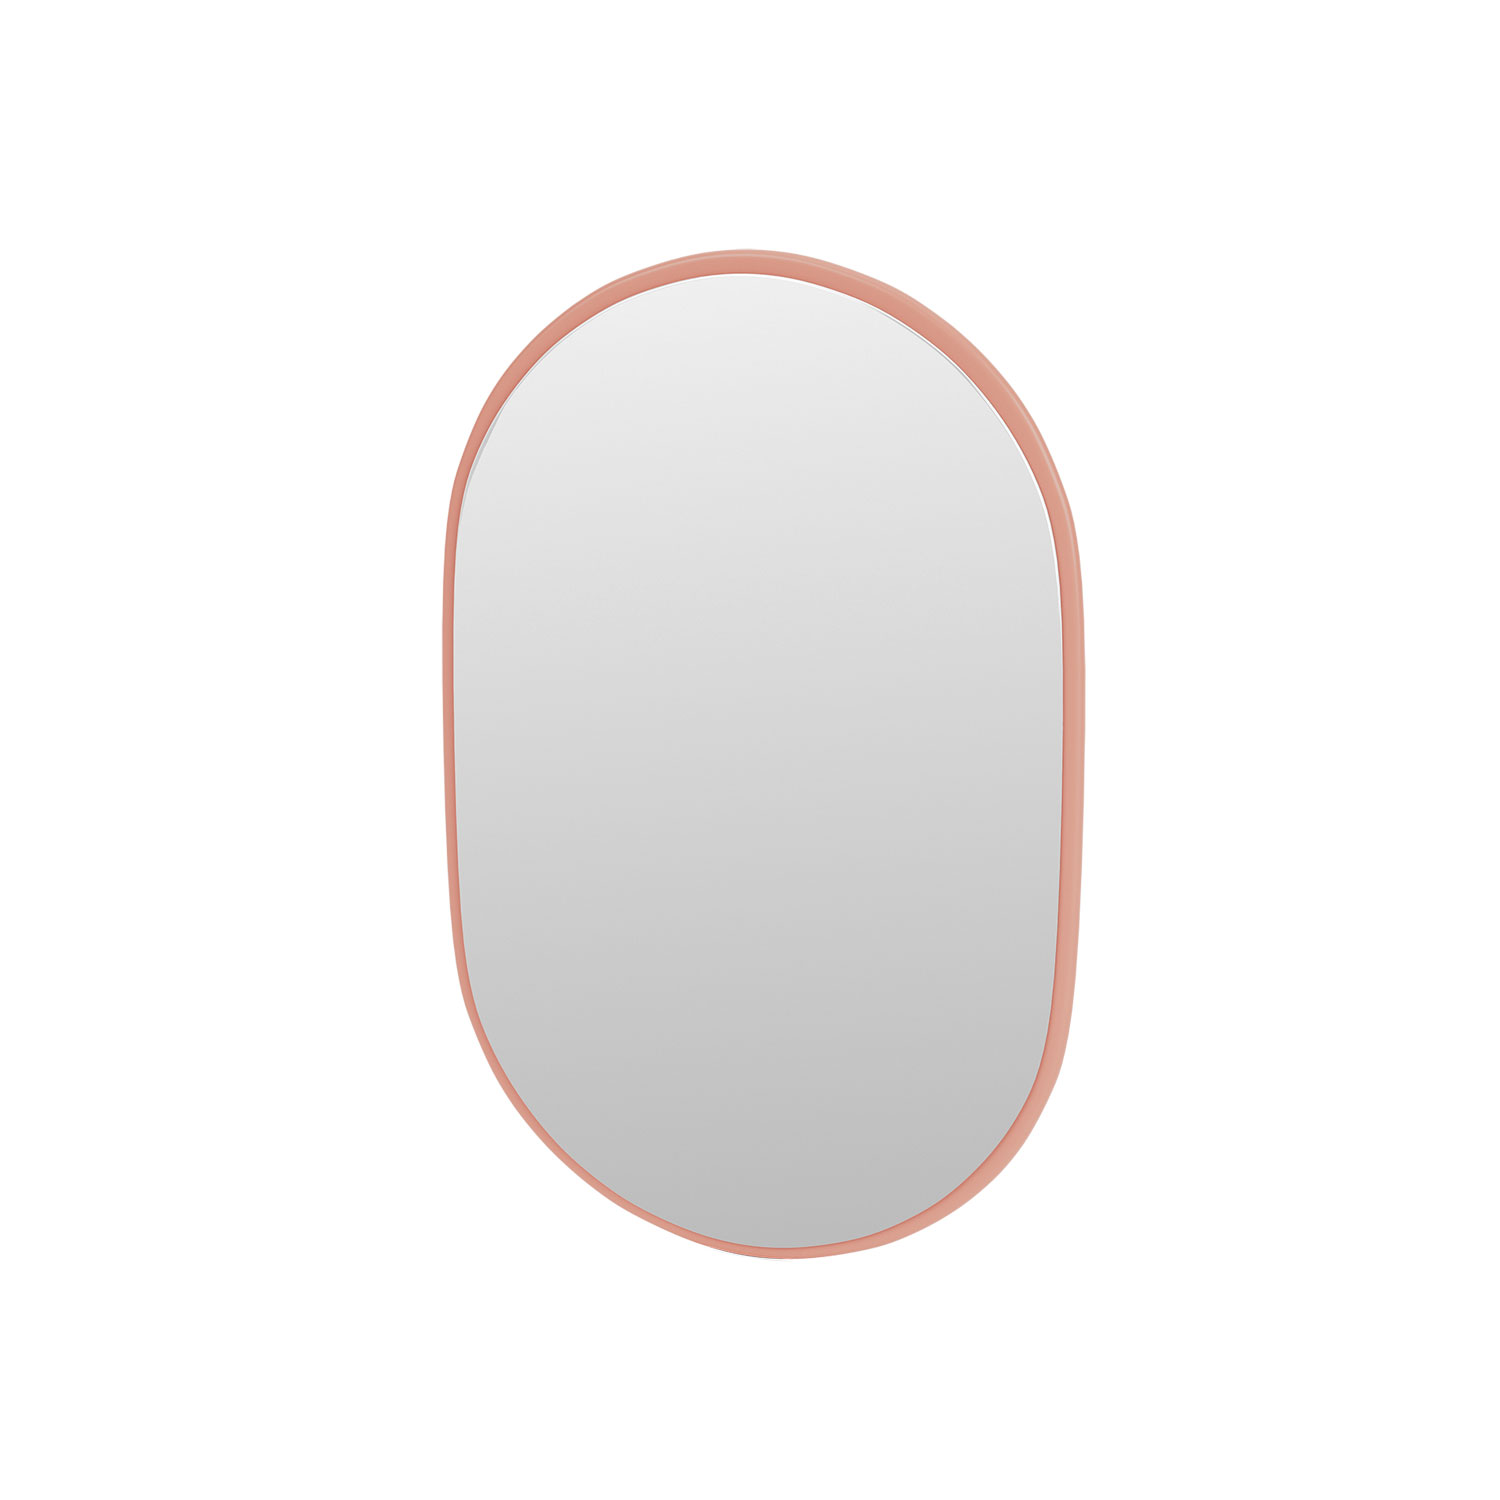 LOOK oval mirror, Rhubarb